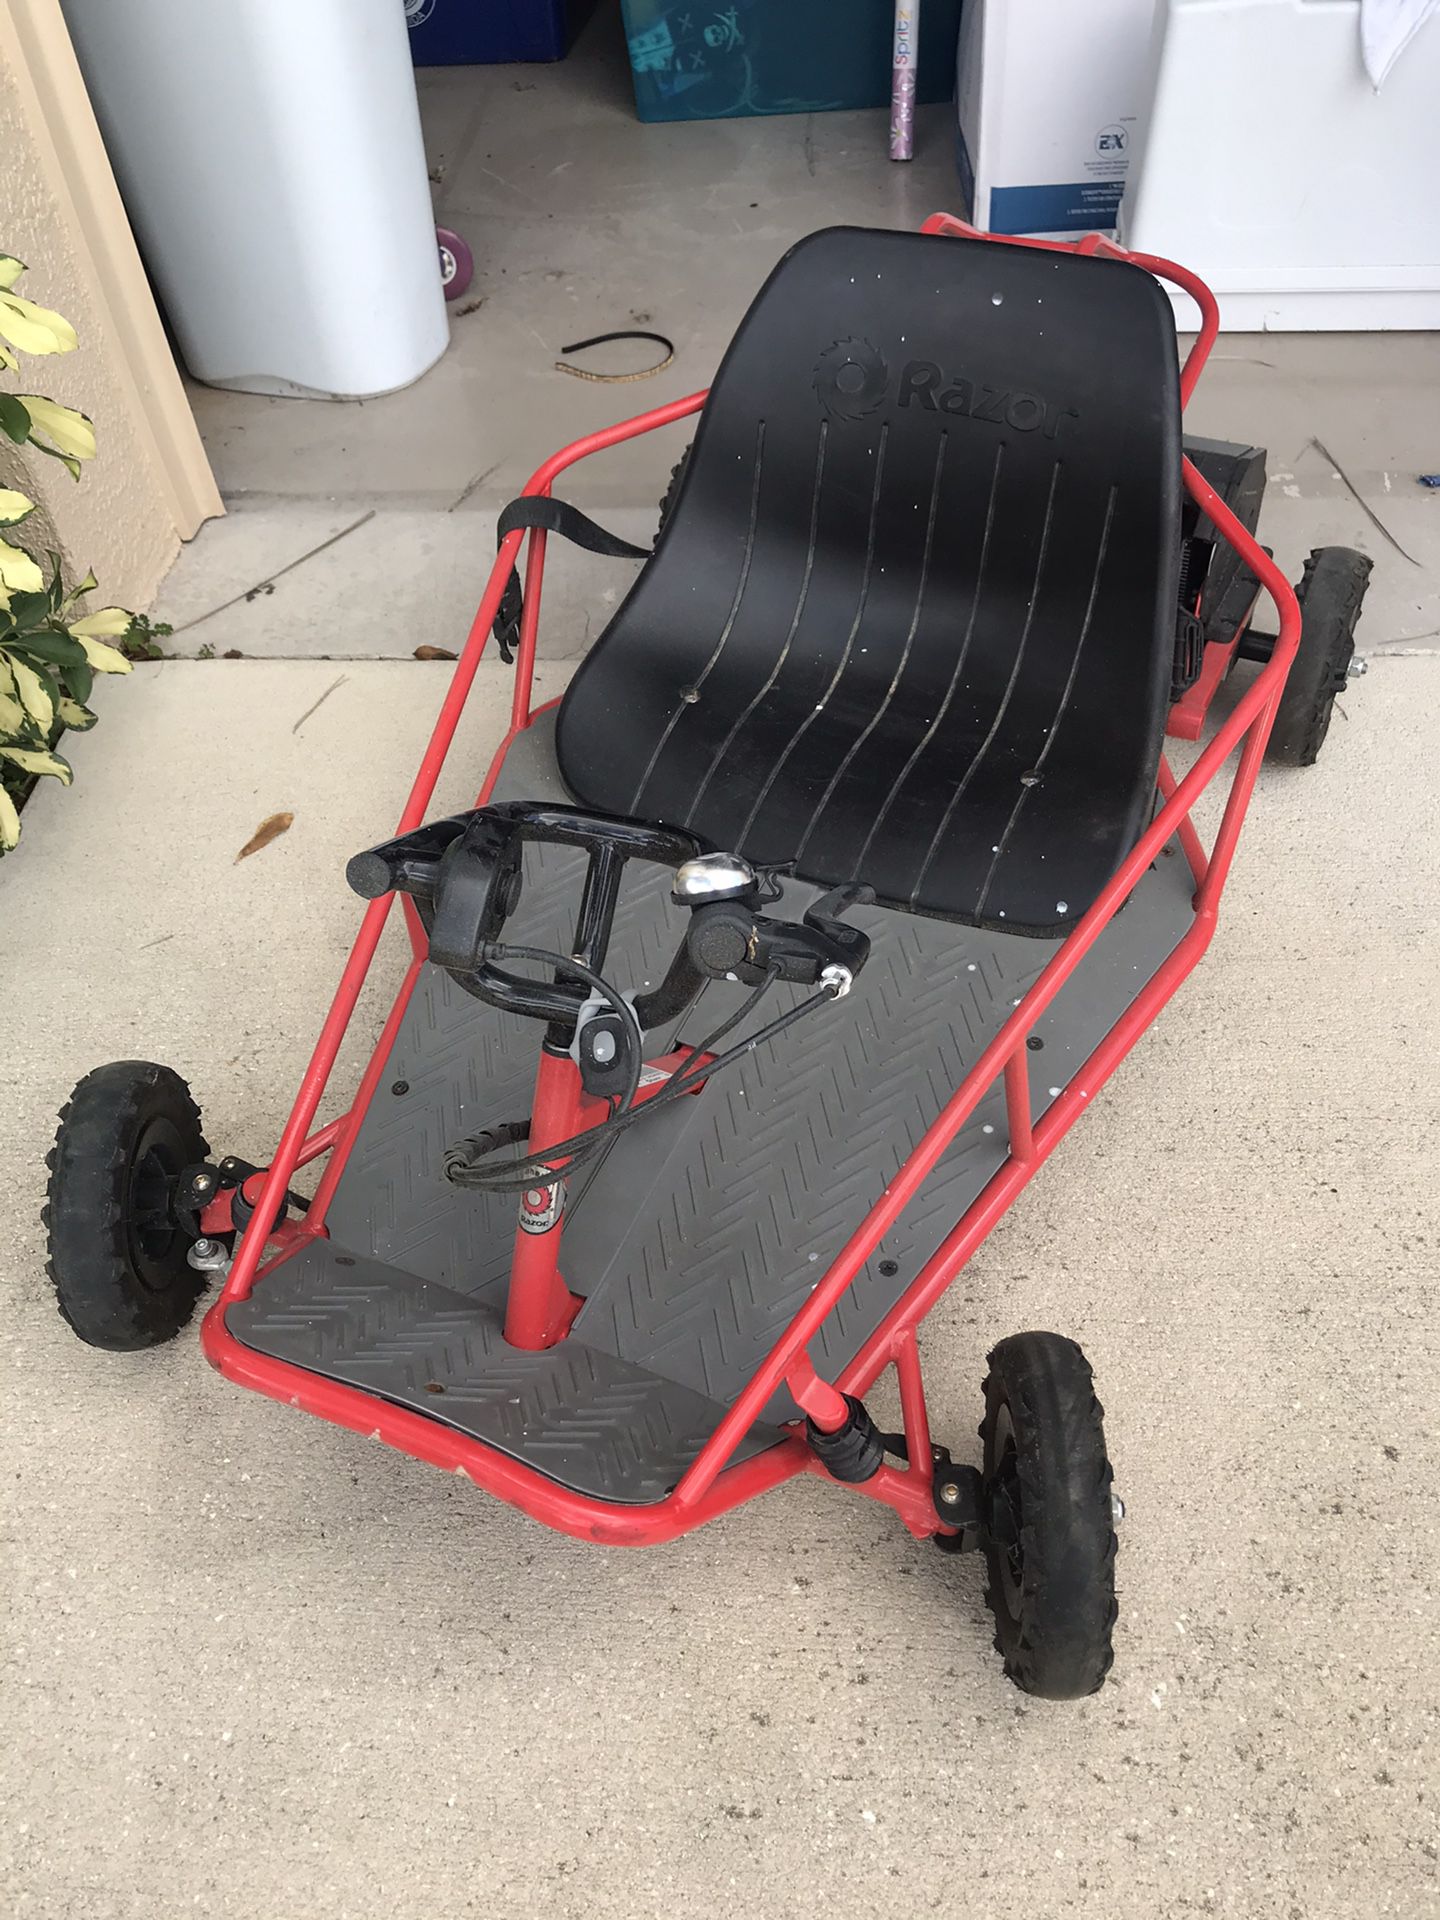 Razor electric go-cart